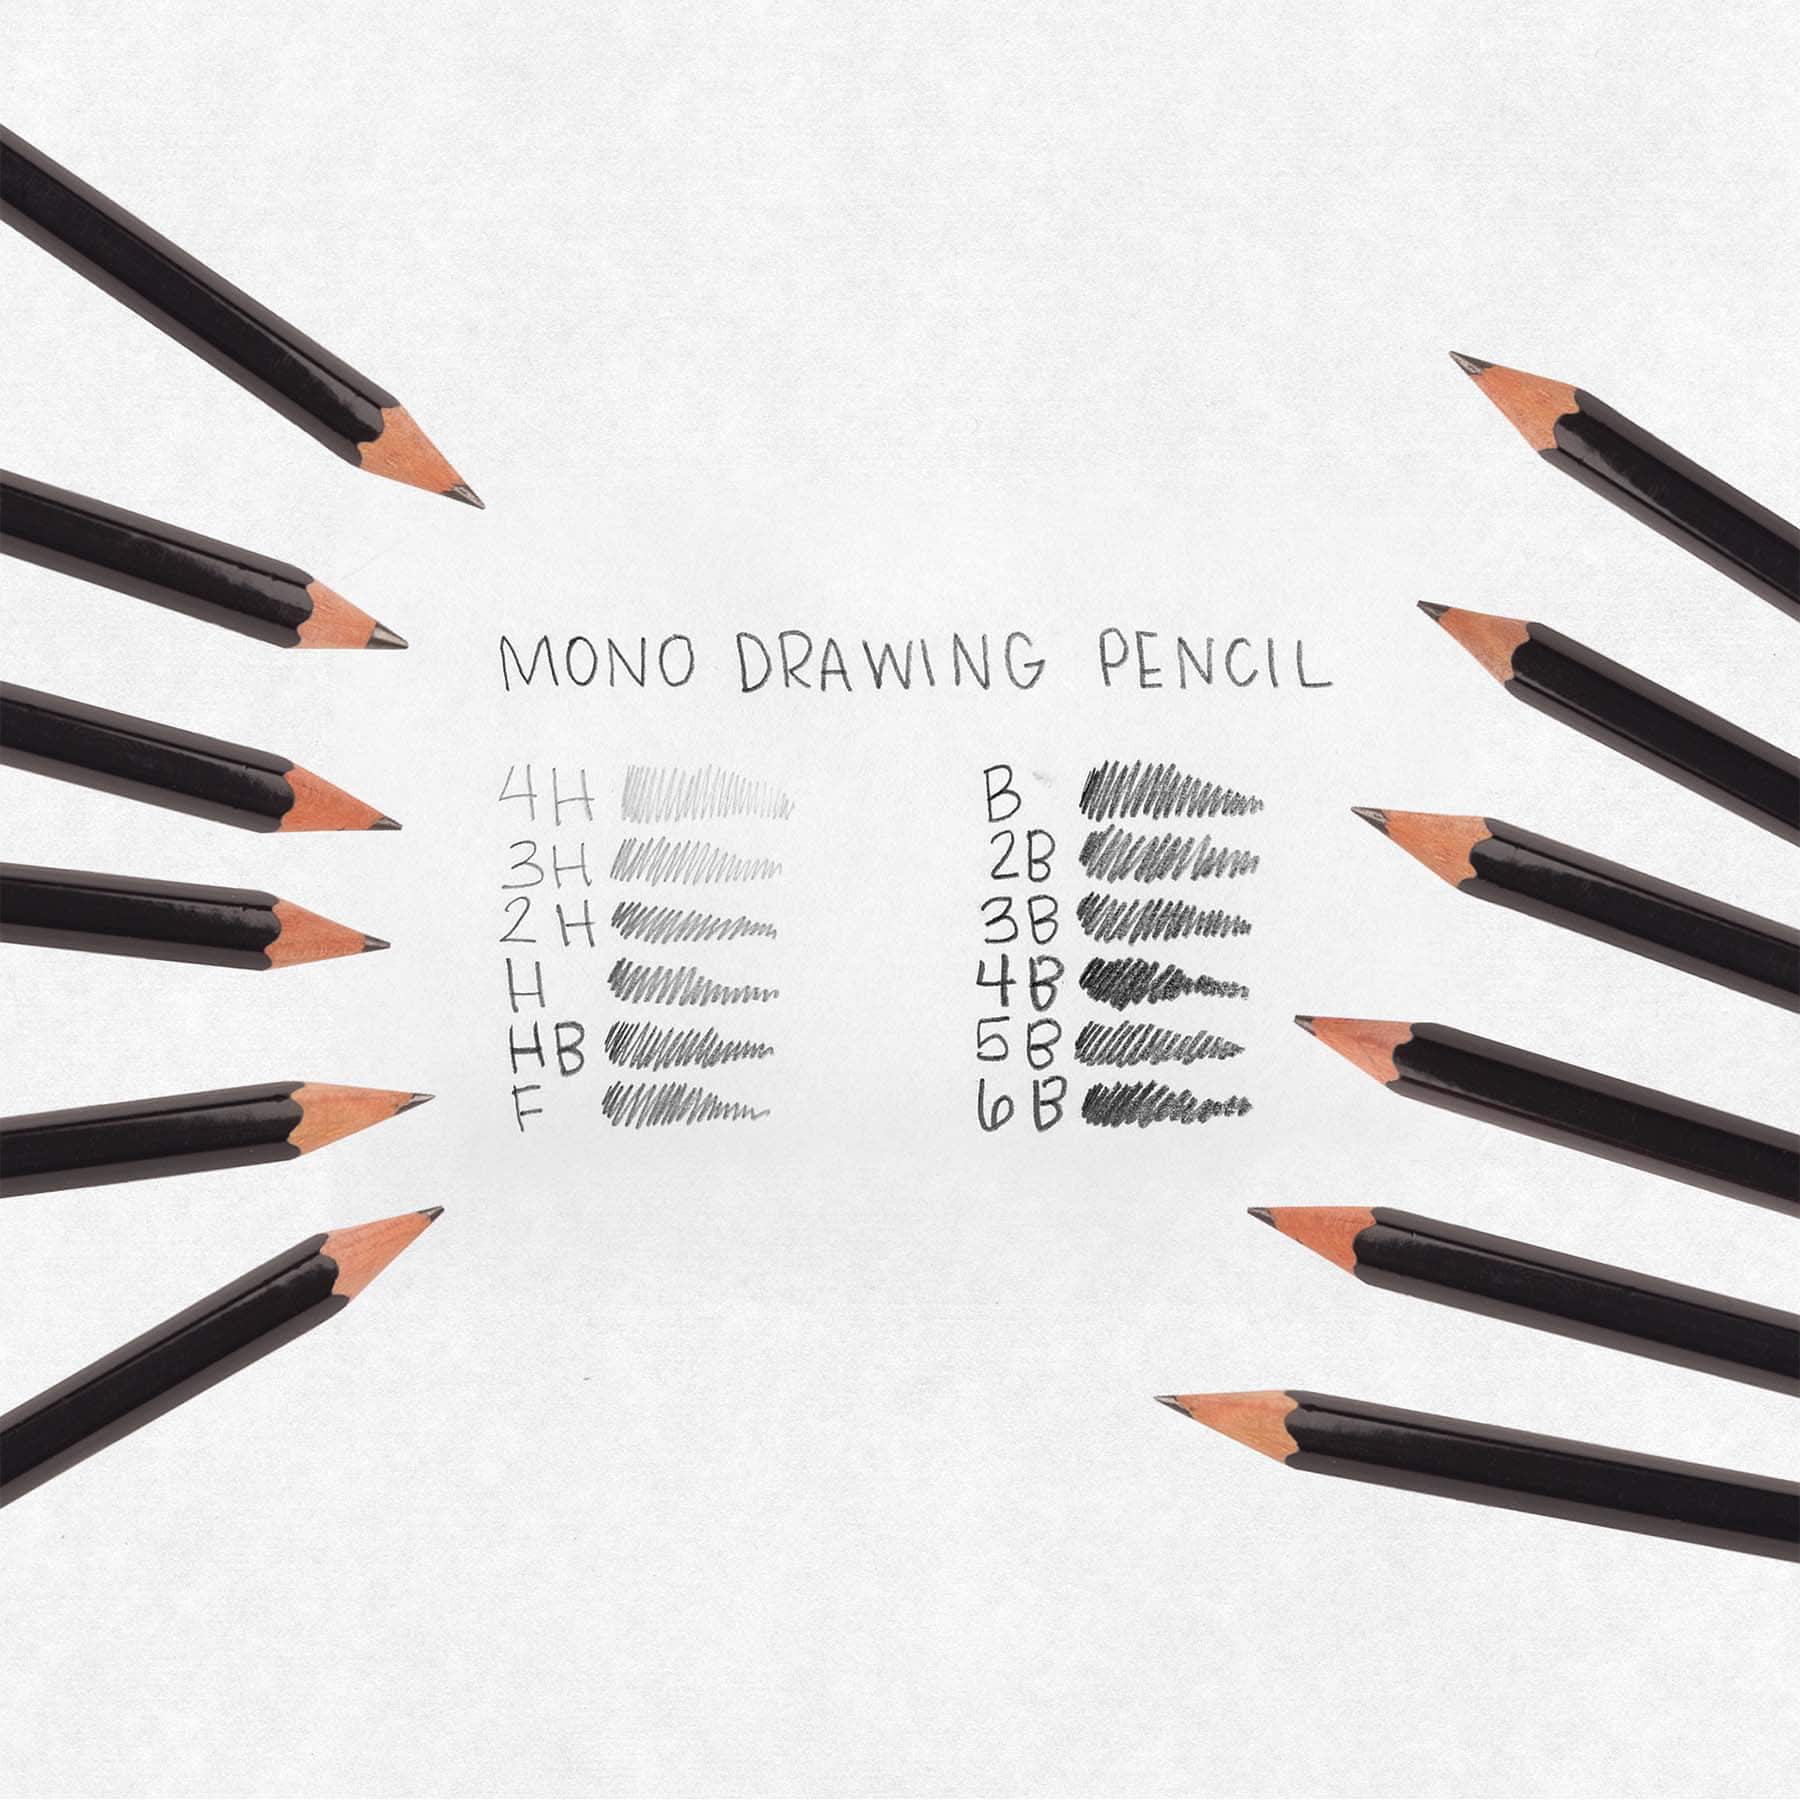 Tombow Mono Professional Drawing 12 Pencil Set